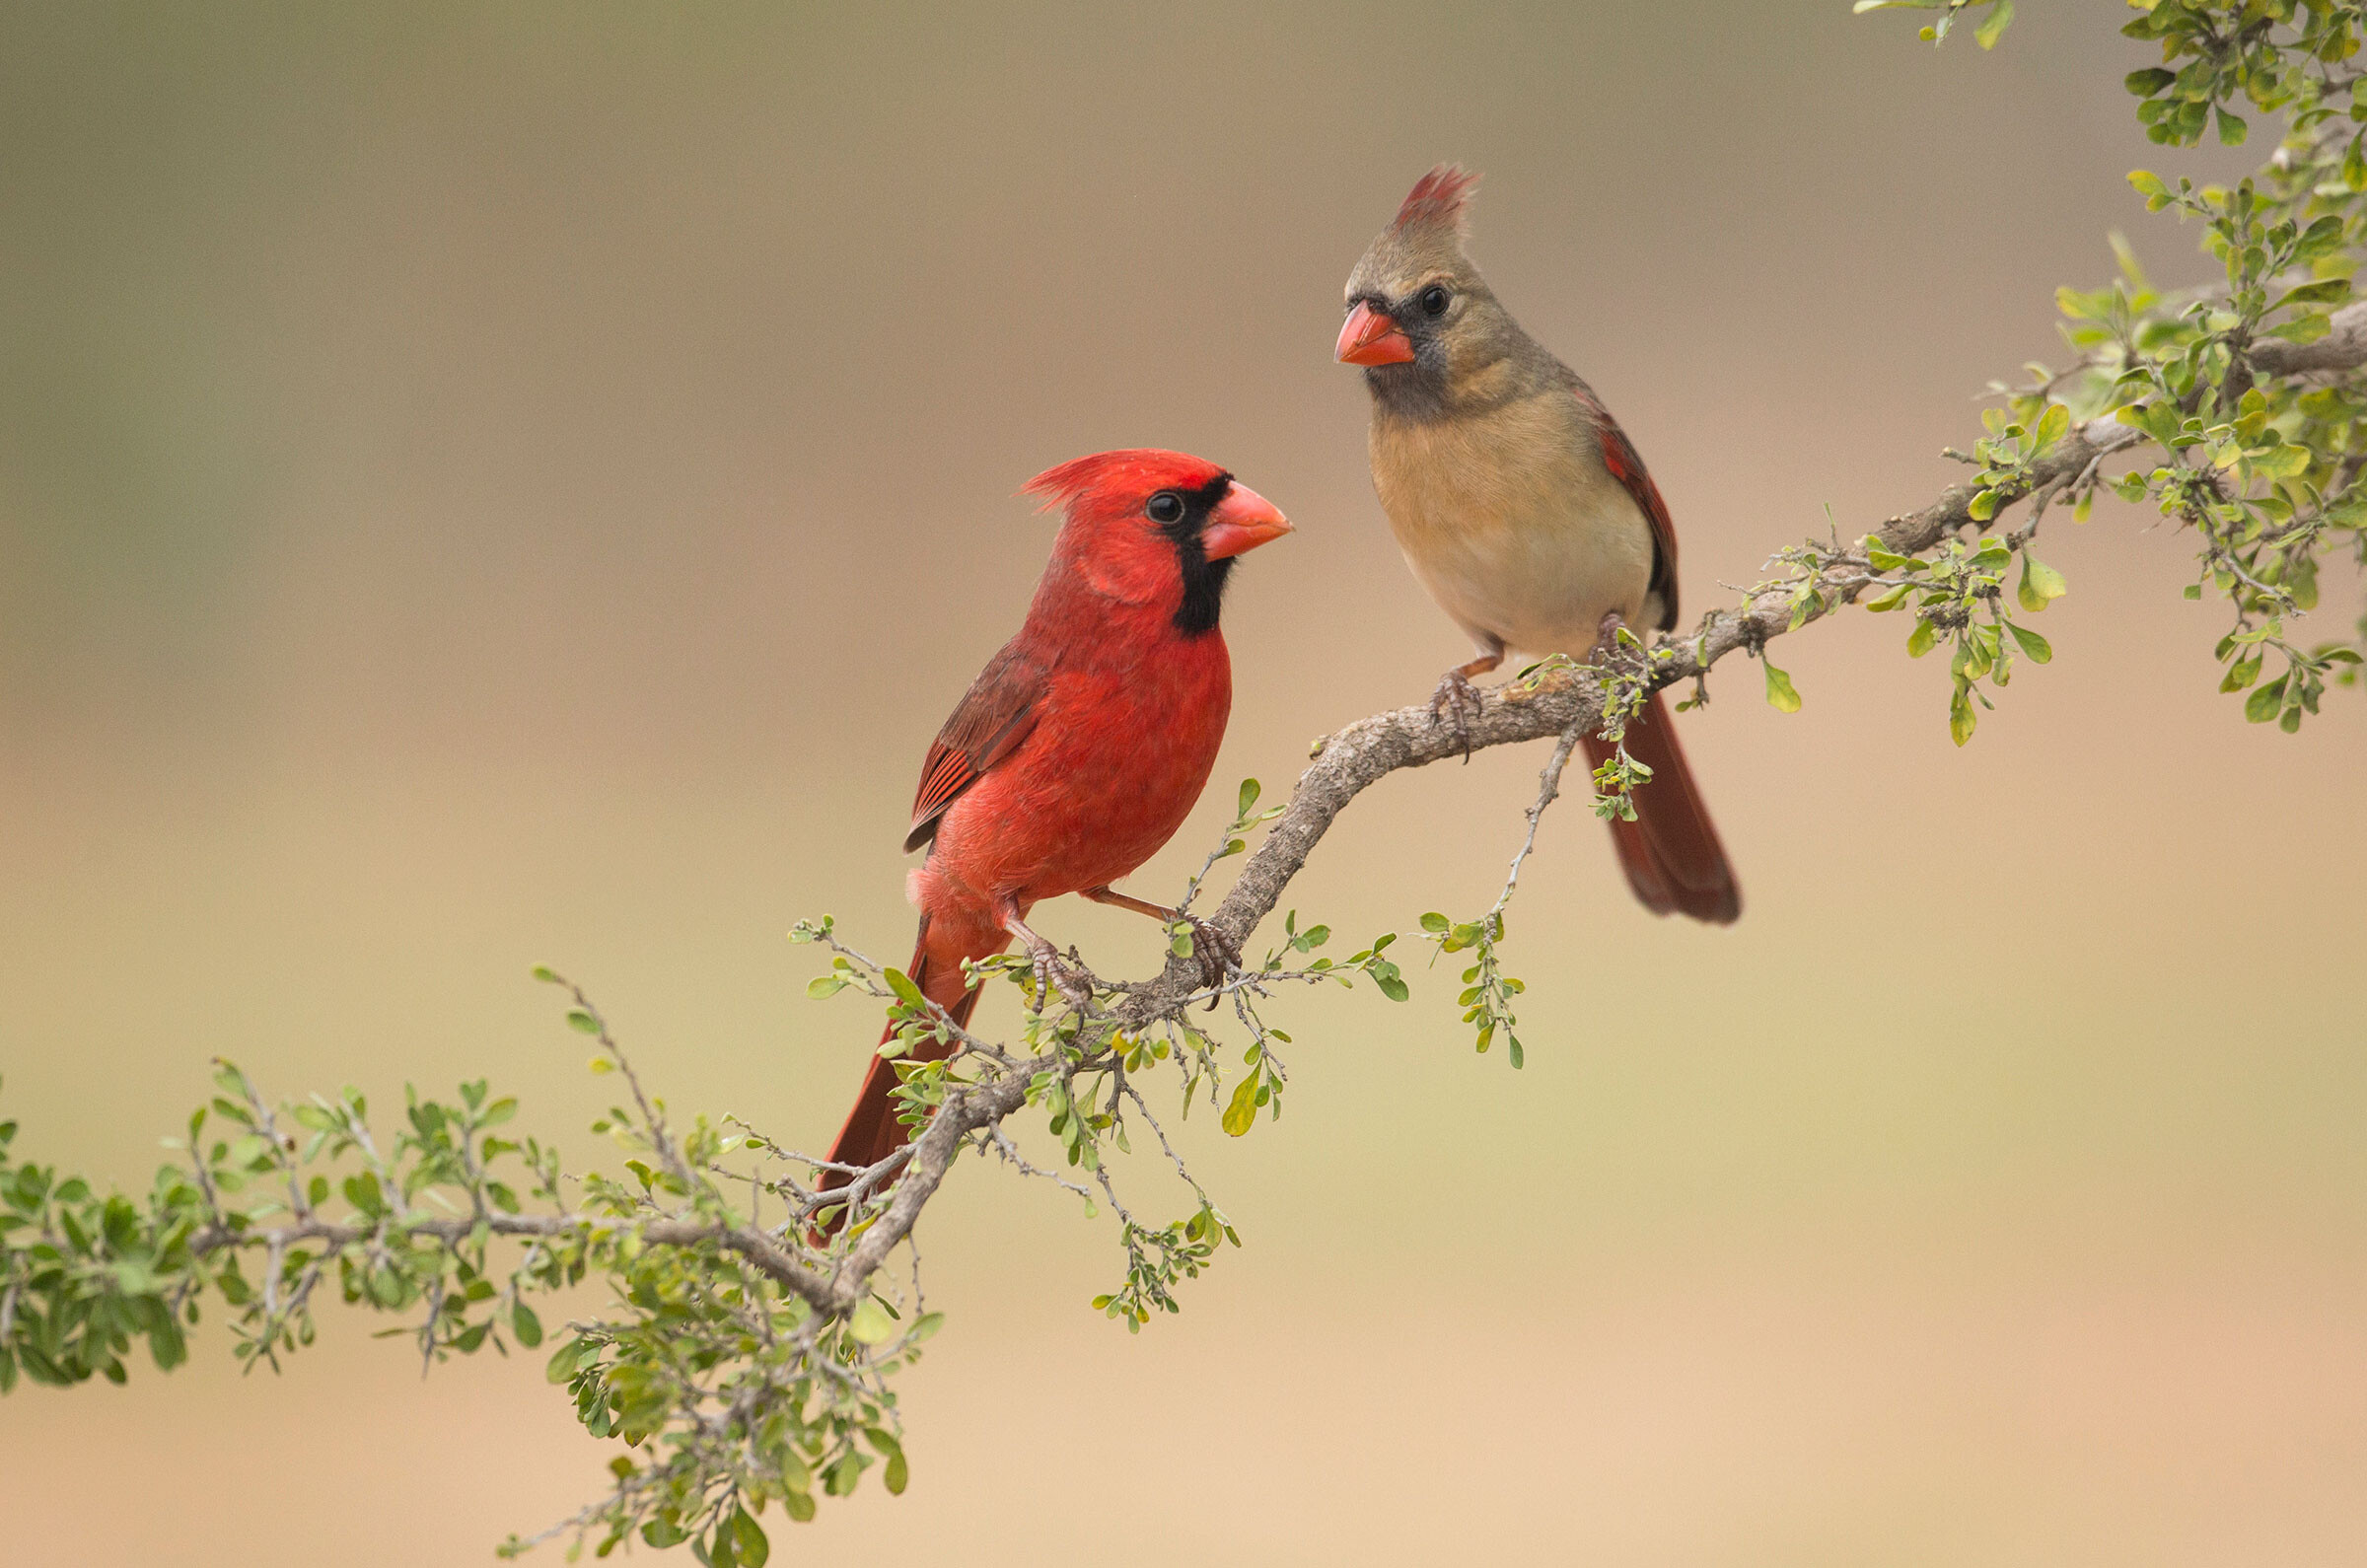 do cardinals migrate?